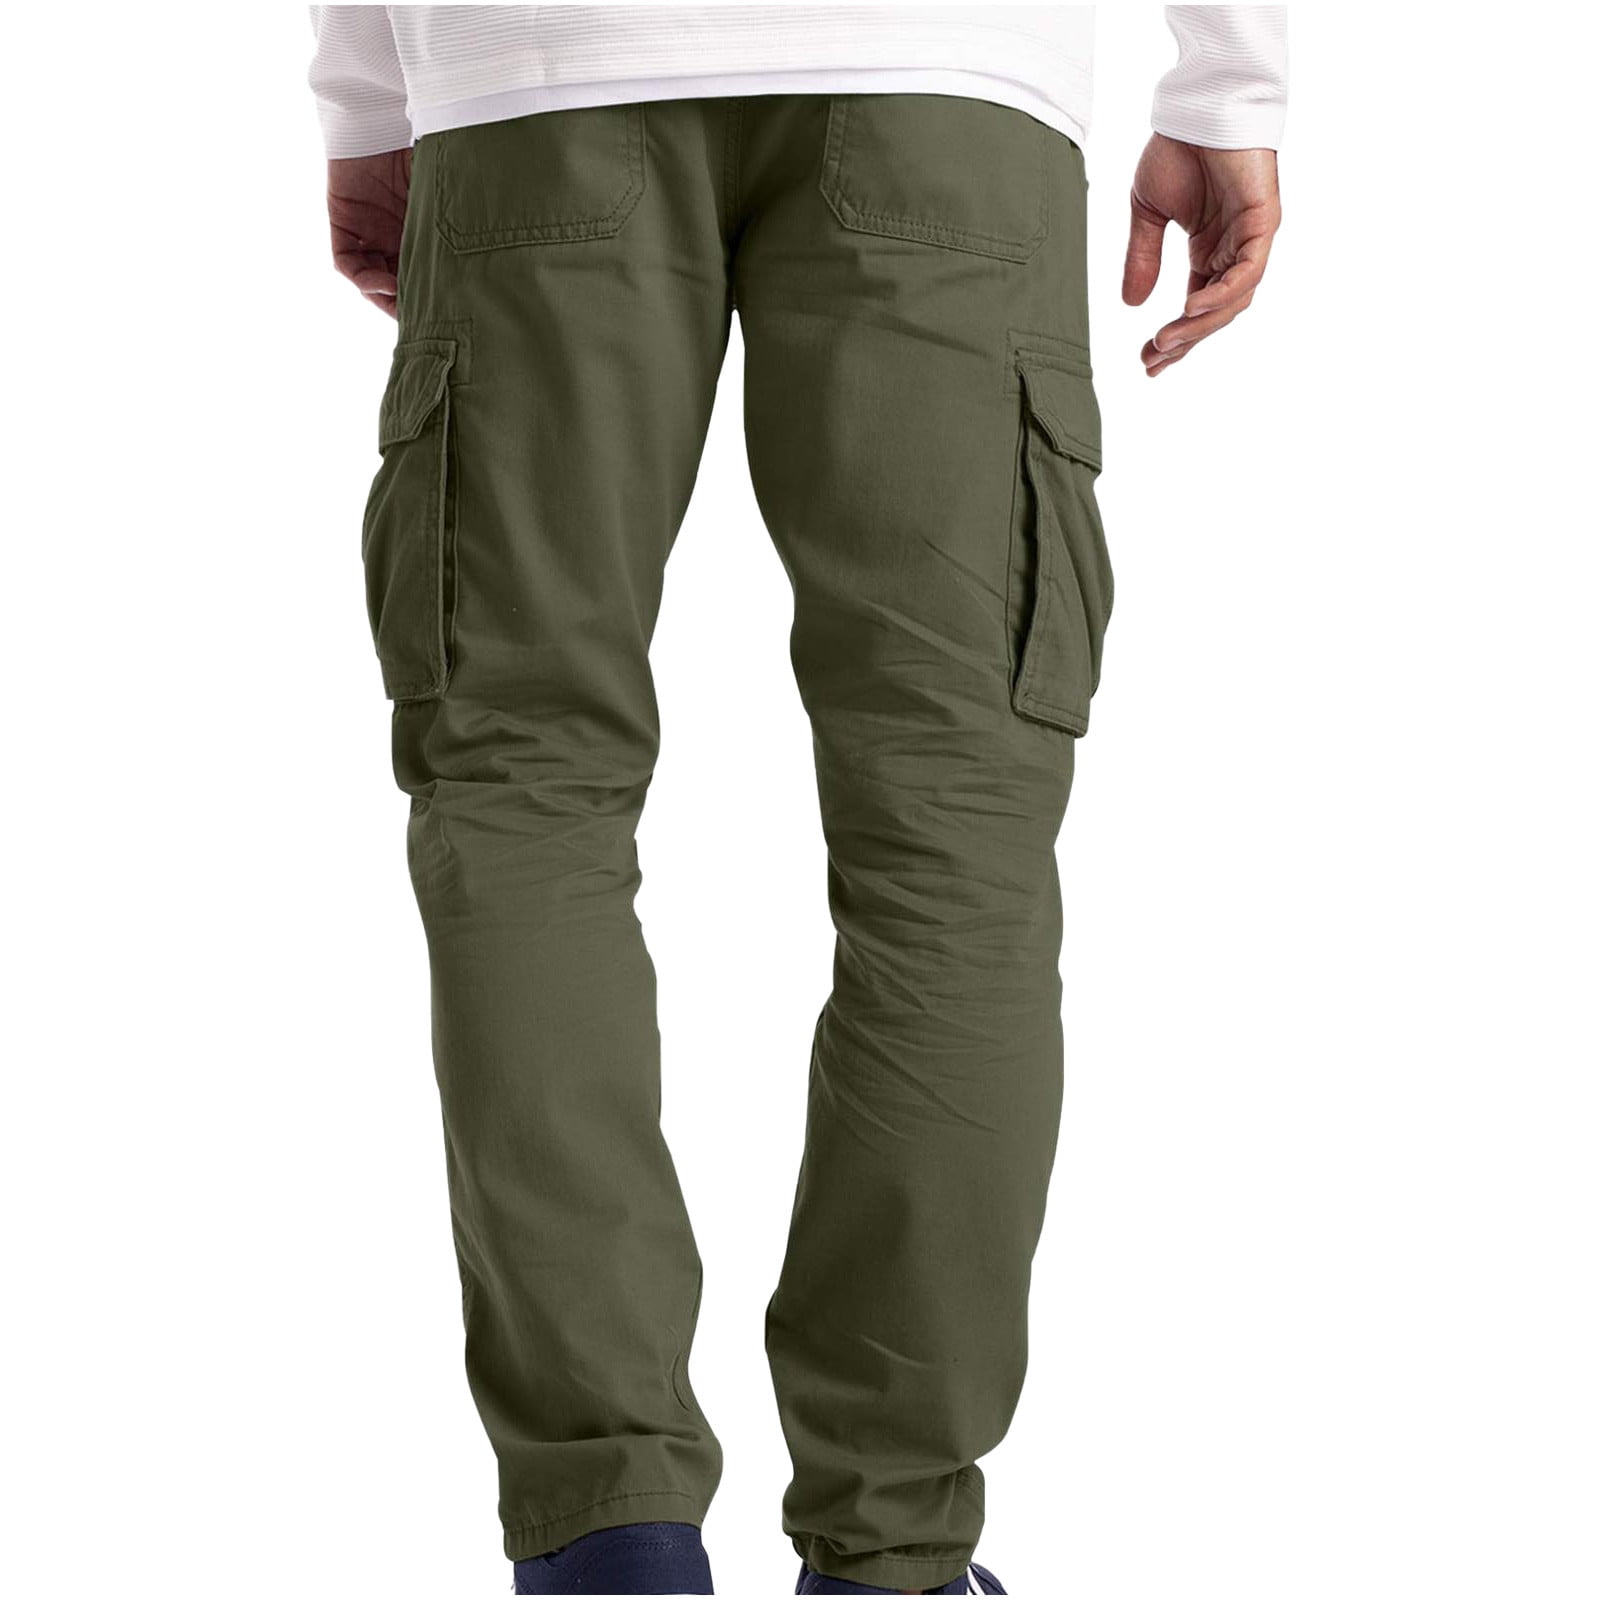 Cameland Men's Cargo Trousers Work Wear Combat Safety Cargo 6 Pocket ...